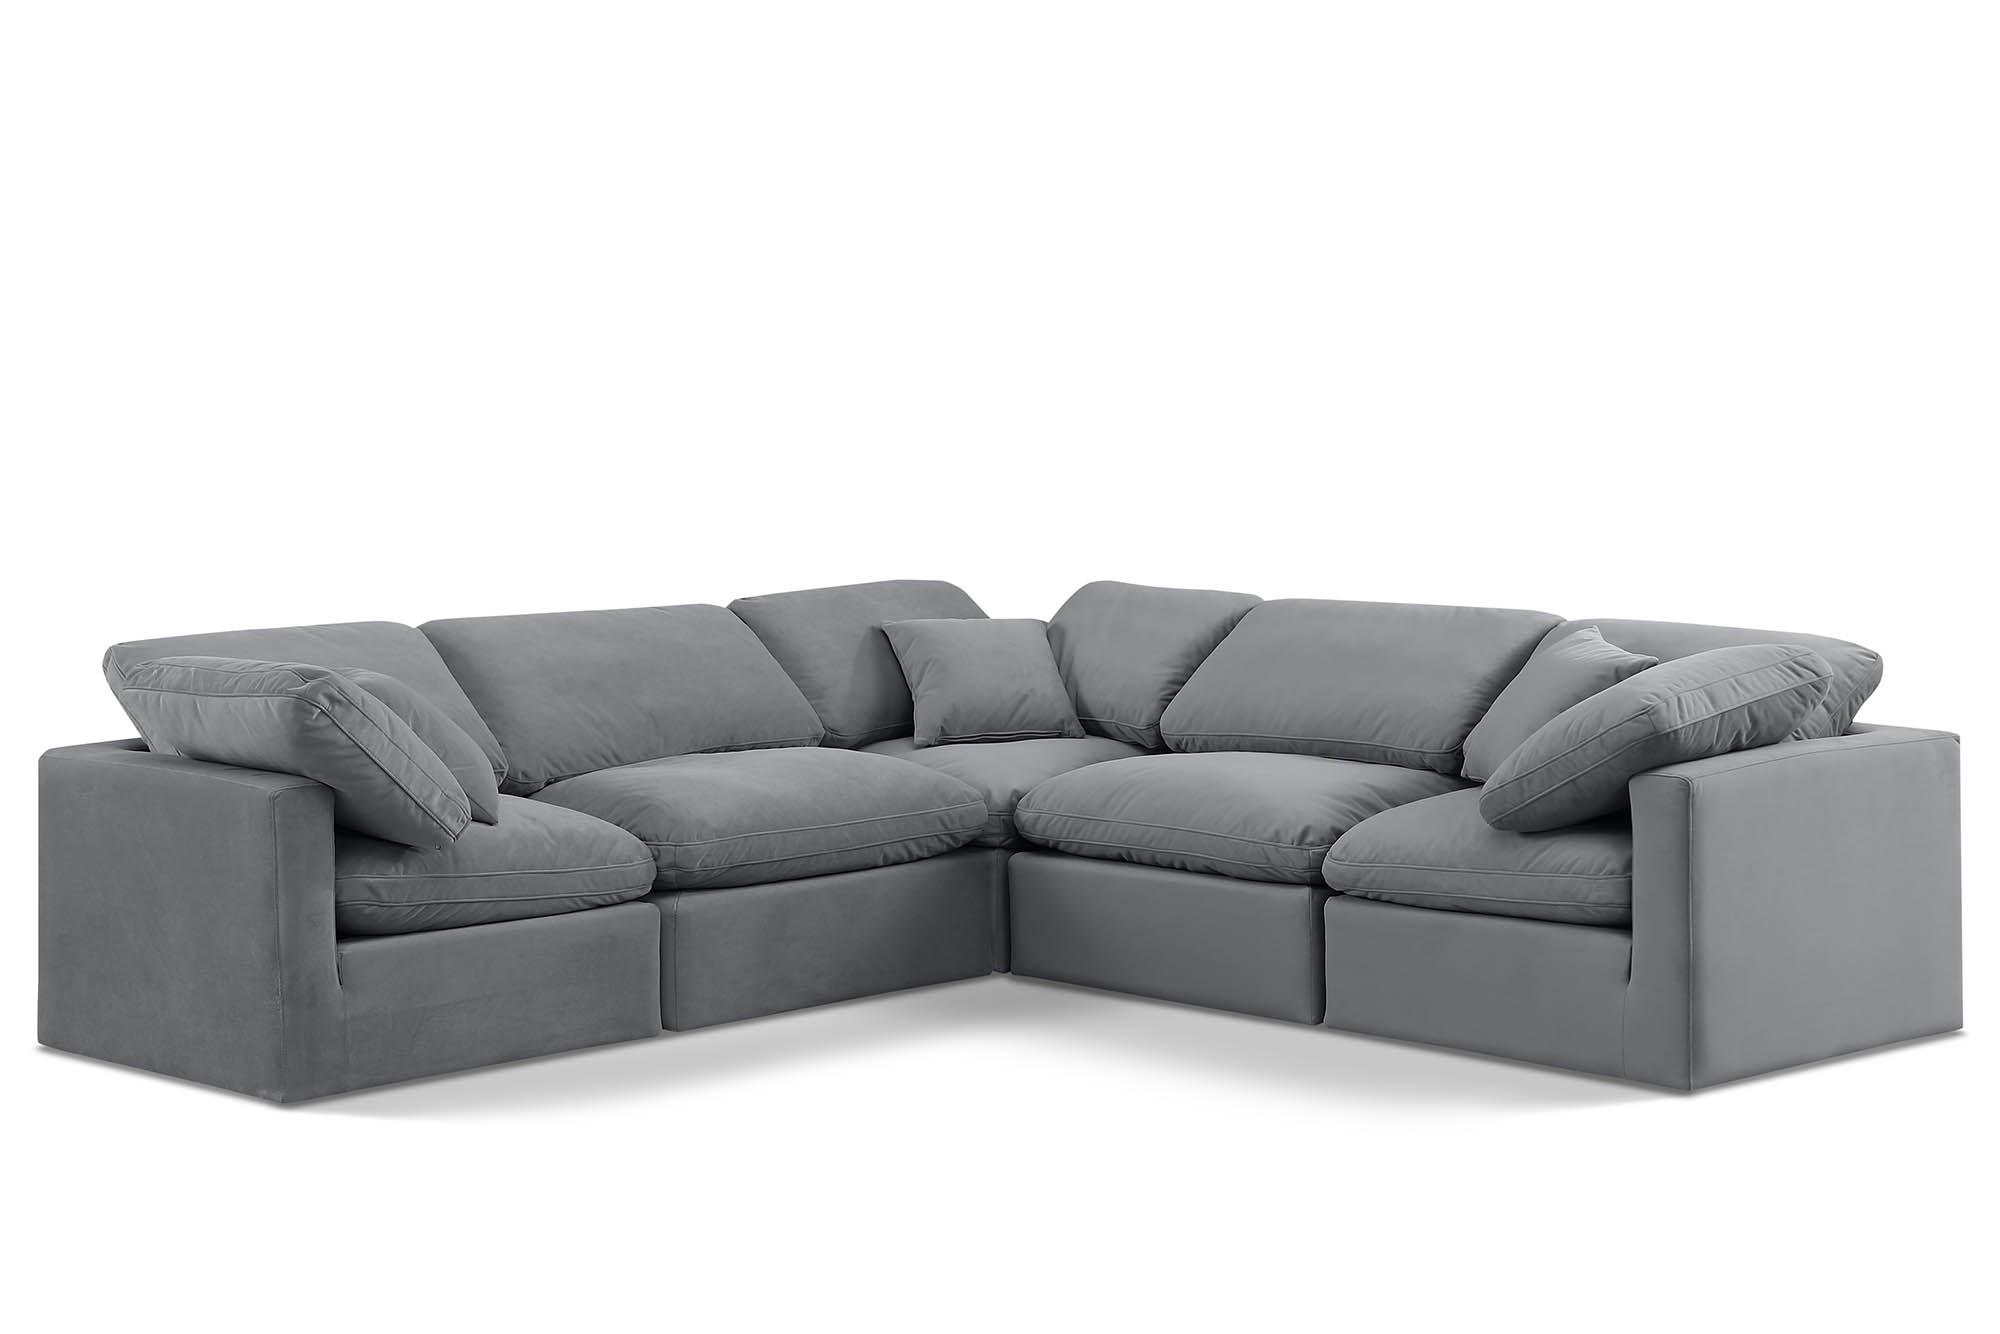 Contemporary, Modern Modular Sectional Sofa INDULGE 147Grey-Sec5C 147Grey-Sec5C in Gray Velvet